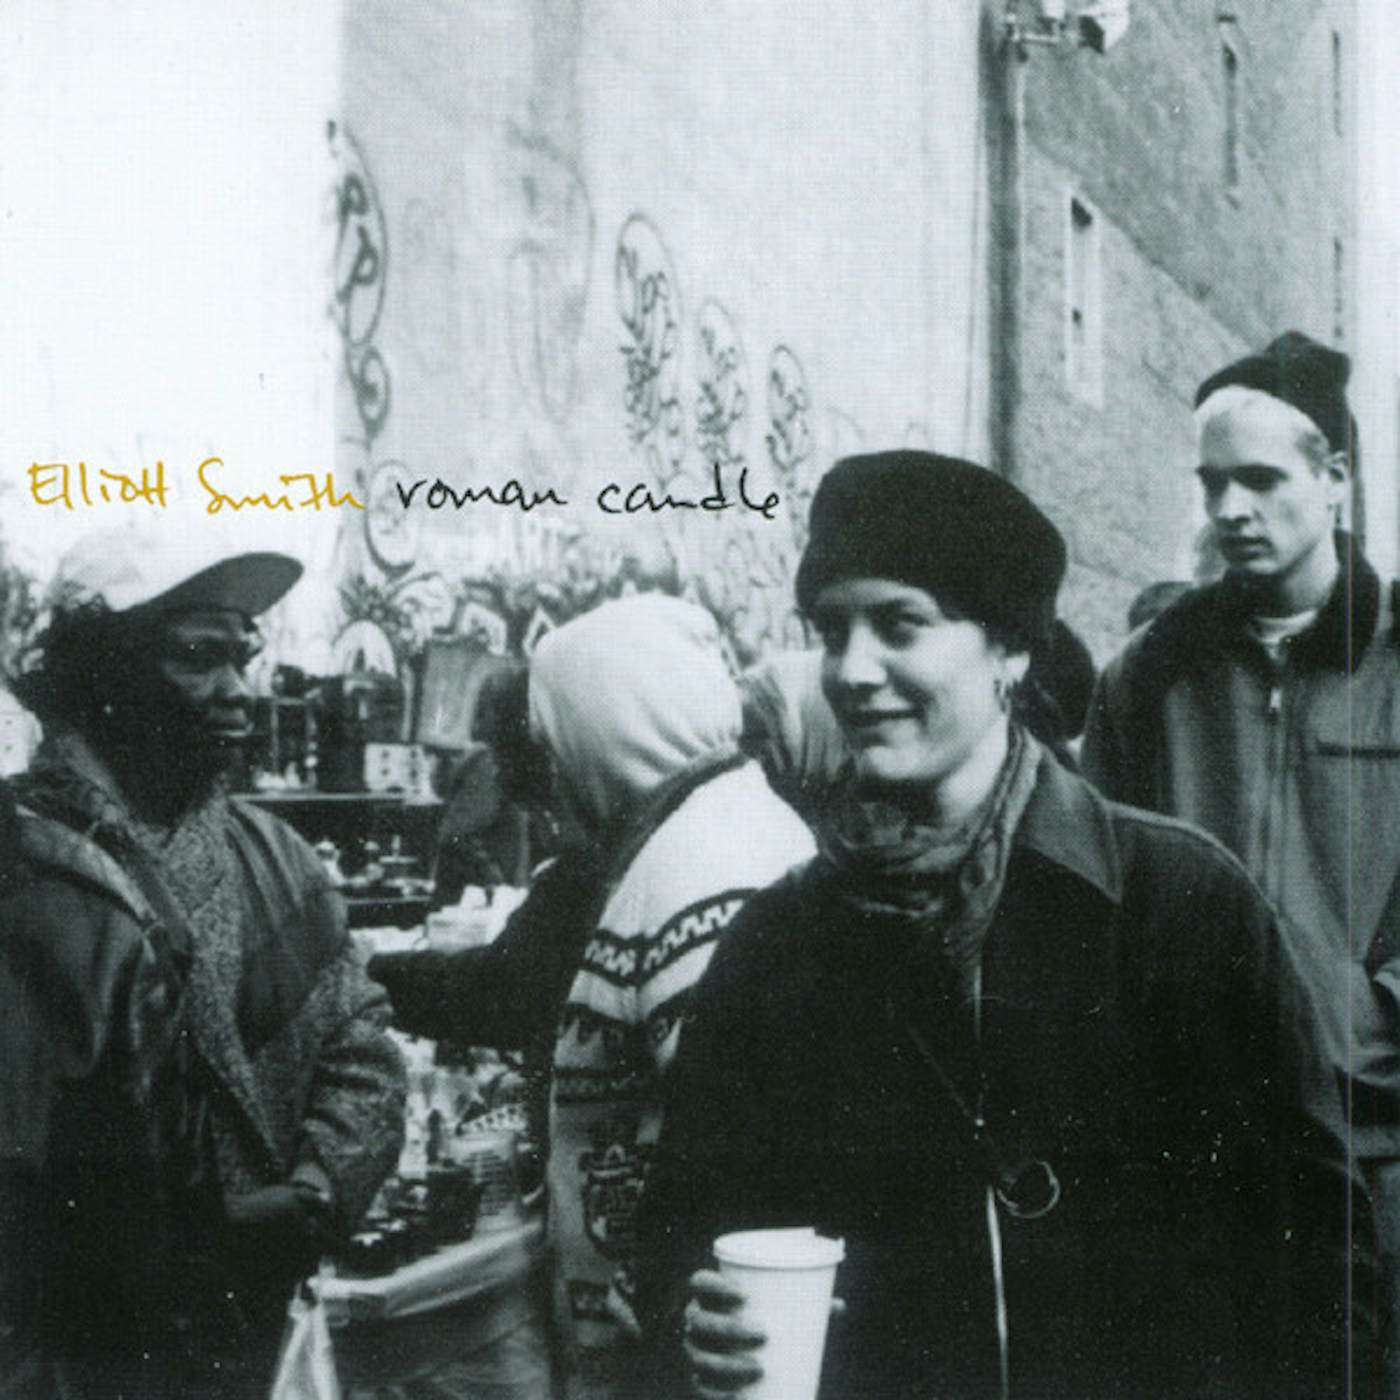 Elliott Smith Roman Candle Vinyl Record